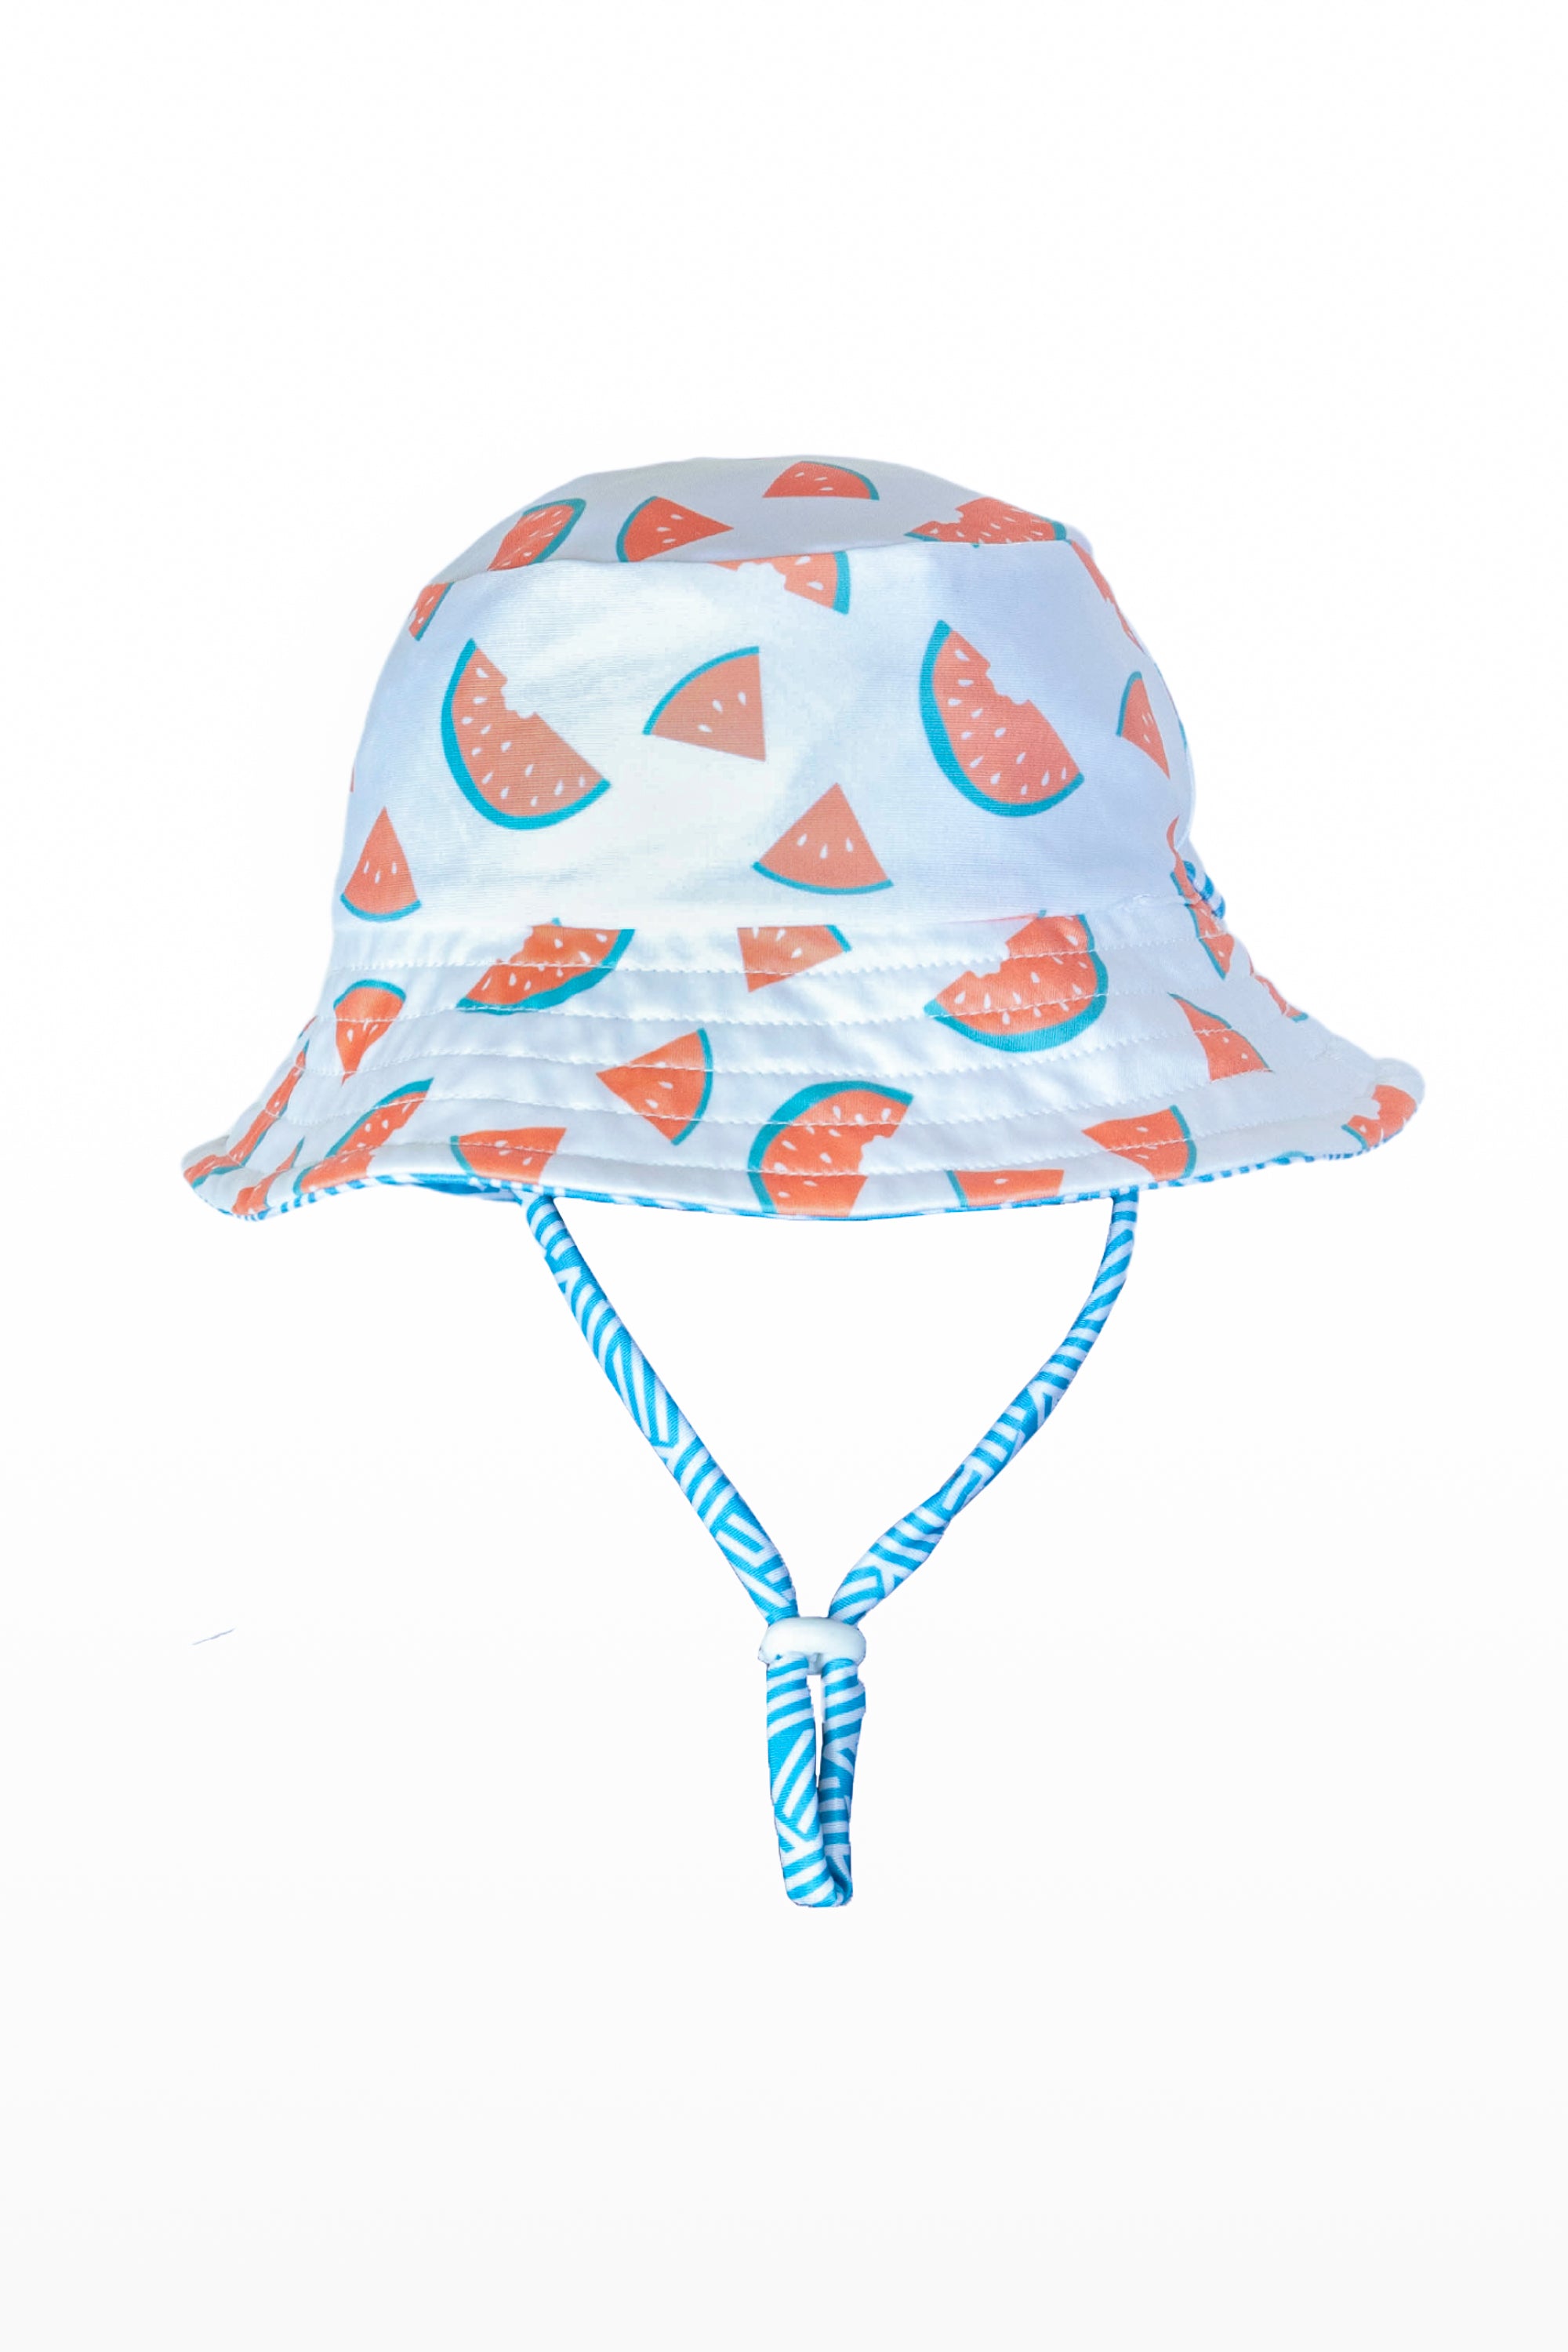 Turtle Island Kids Swim Hat - Reversible